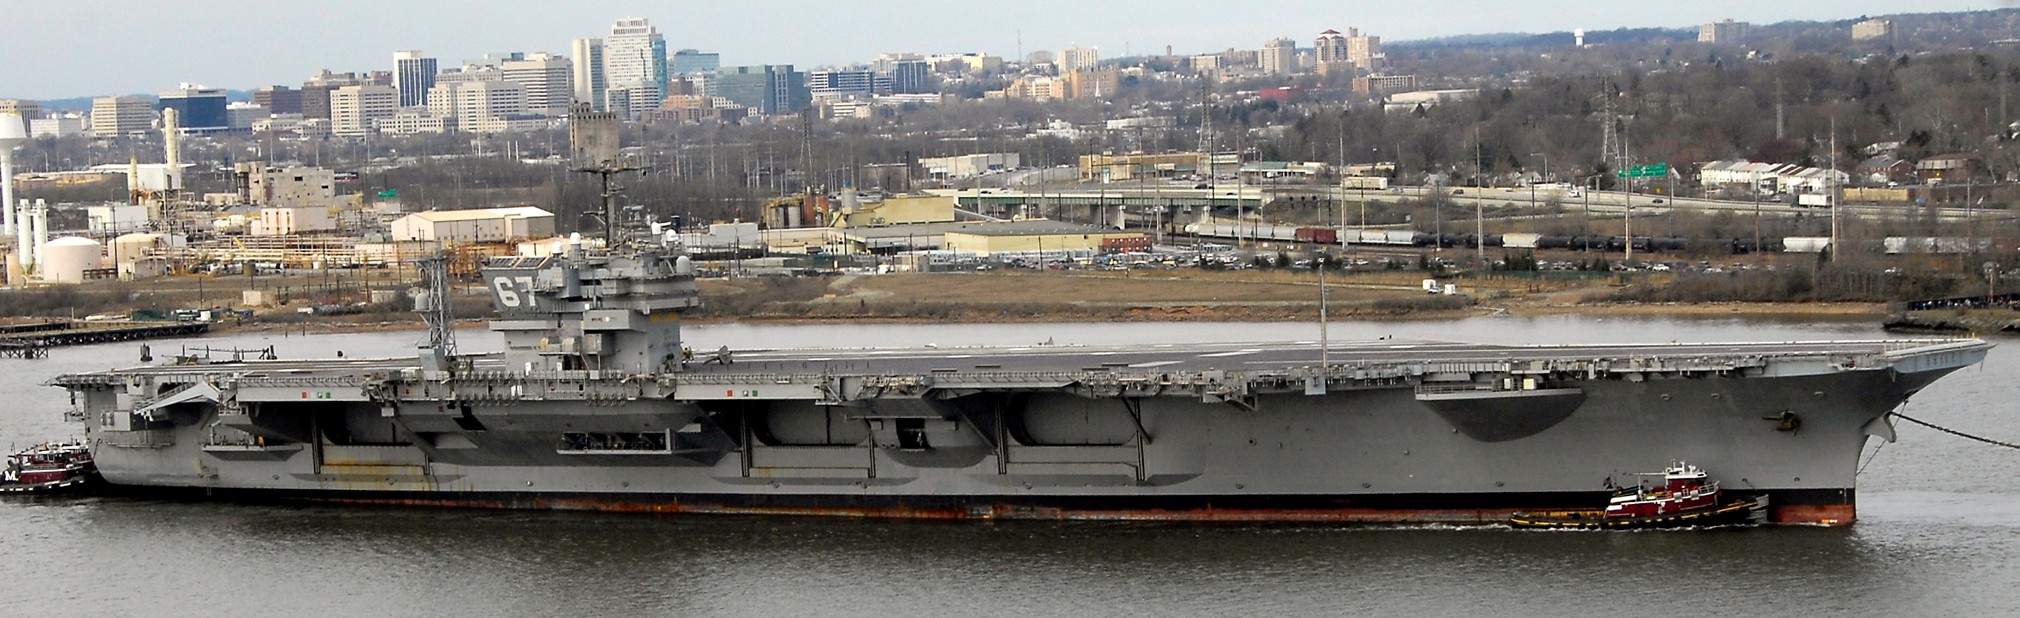 uss john f. kennedy cv-67 decommissioned philadelphia inactive ships maintenance facility sismf 2008 06